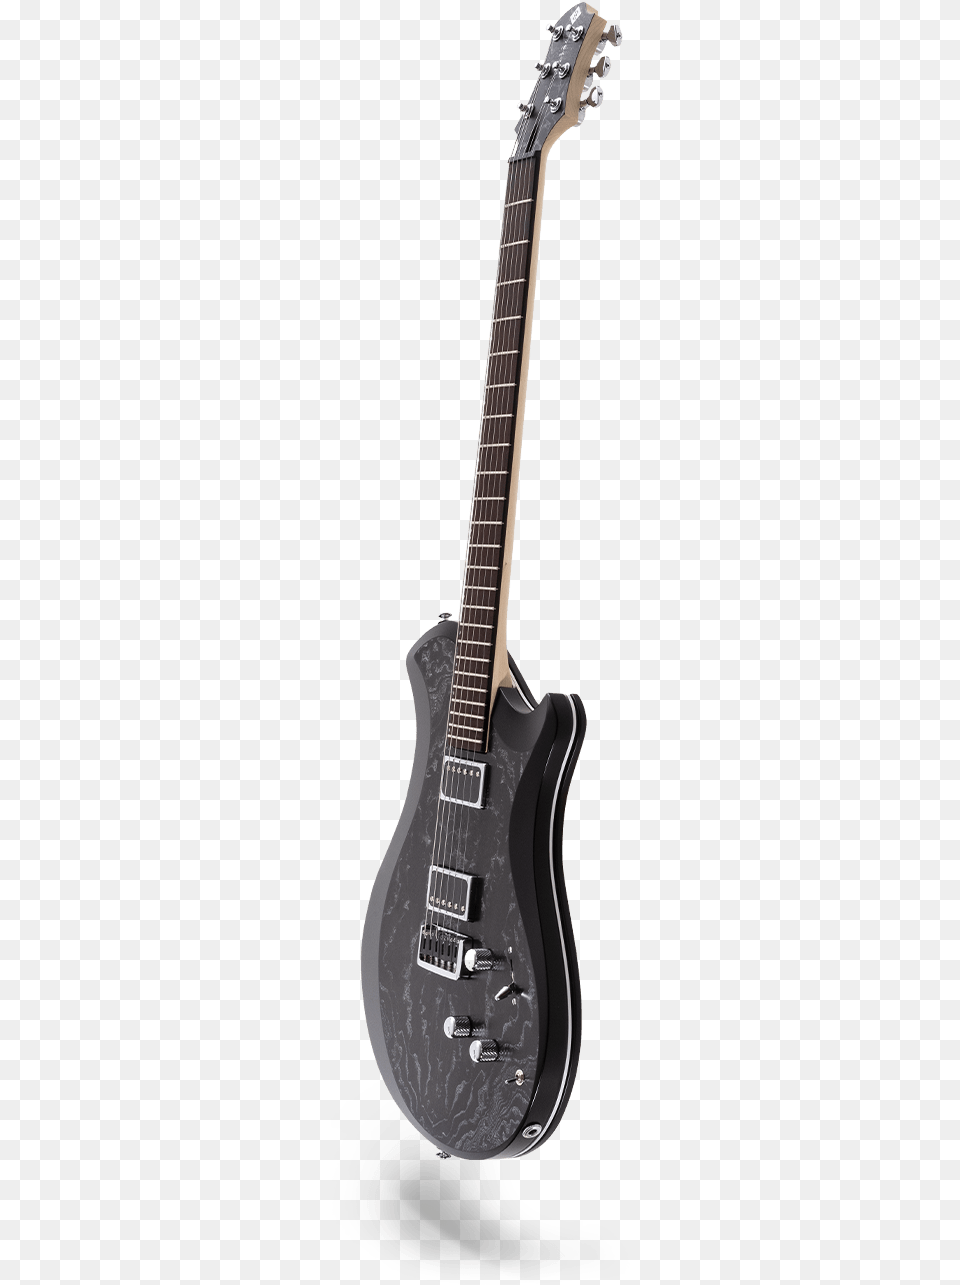 Electric Guitar, Musical Instrument, Bass Guitar, Electric Guitar Png Image